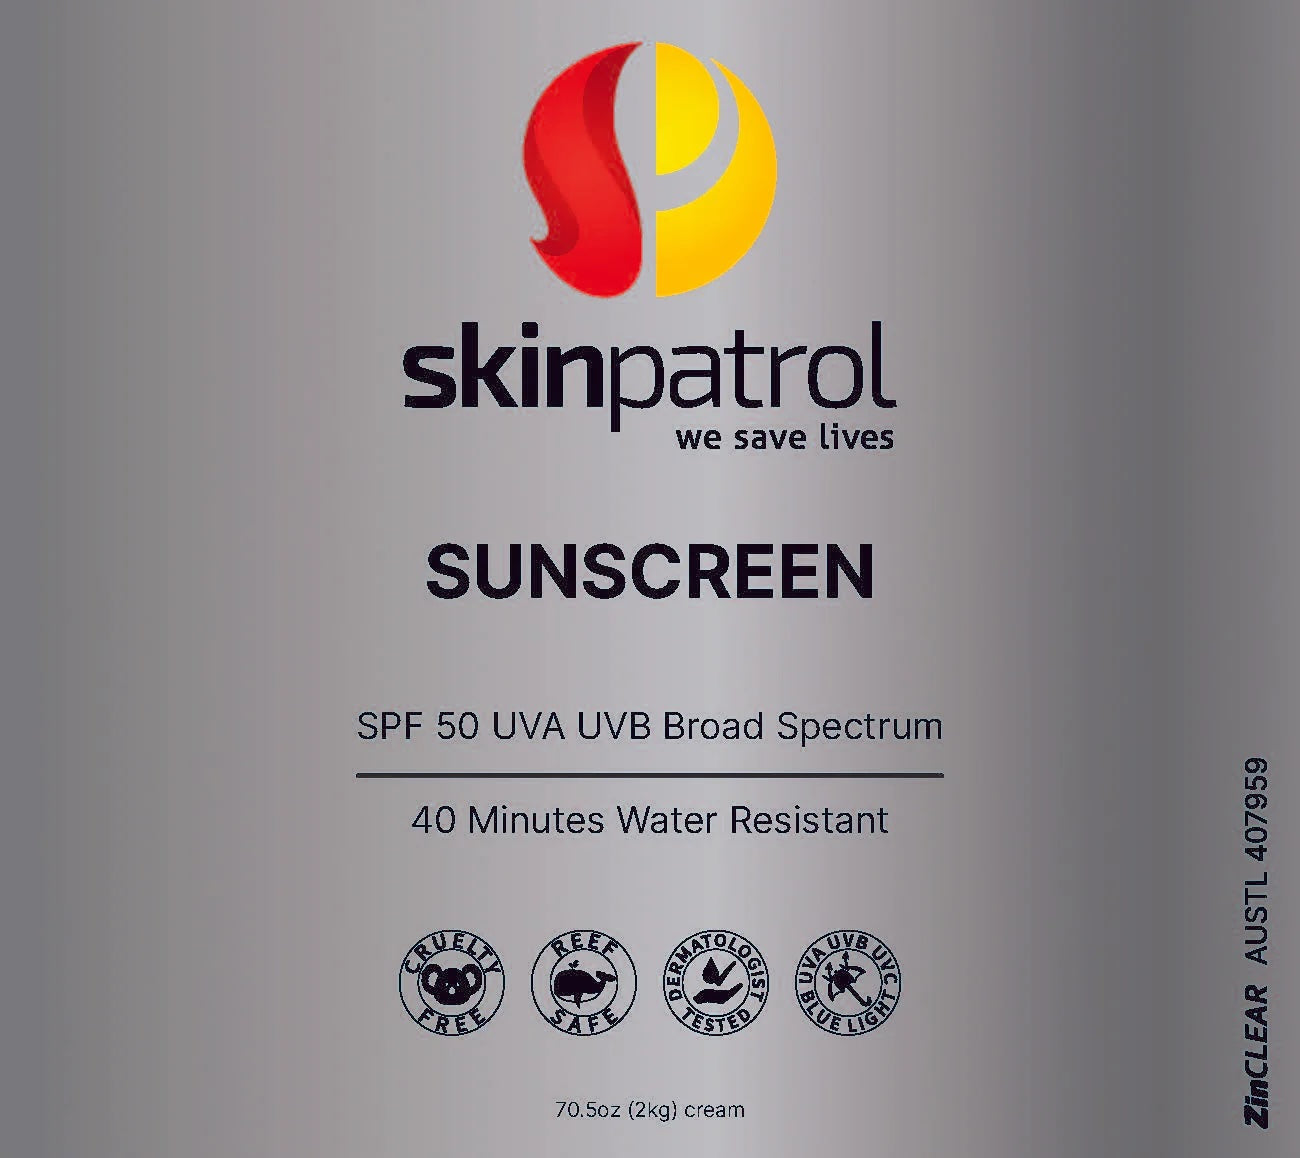 Skin Patrol Sunscreen Bundle - Small